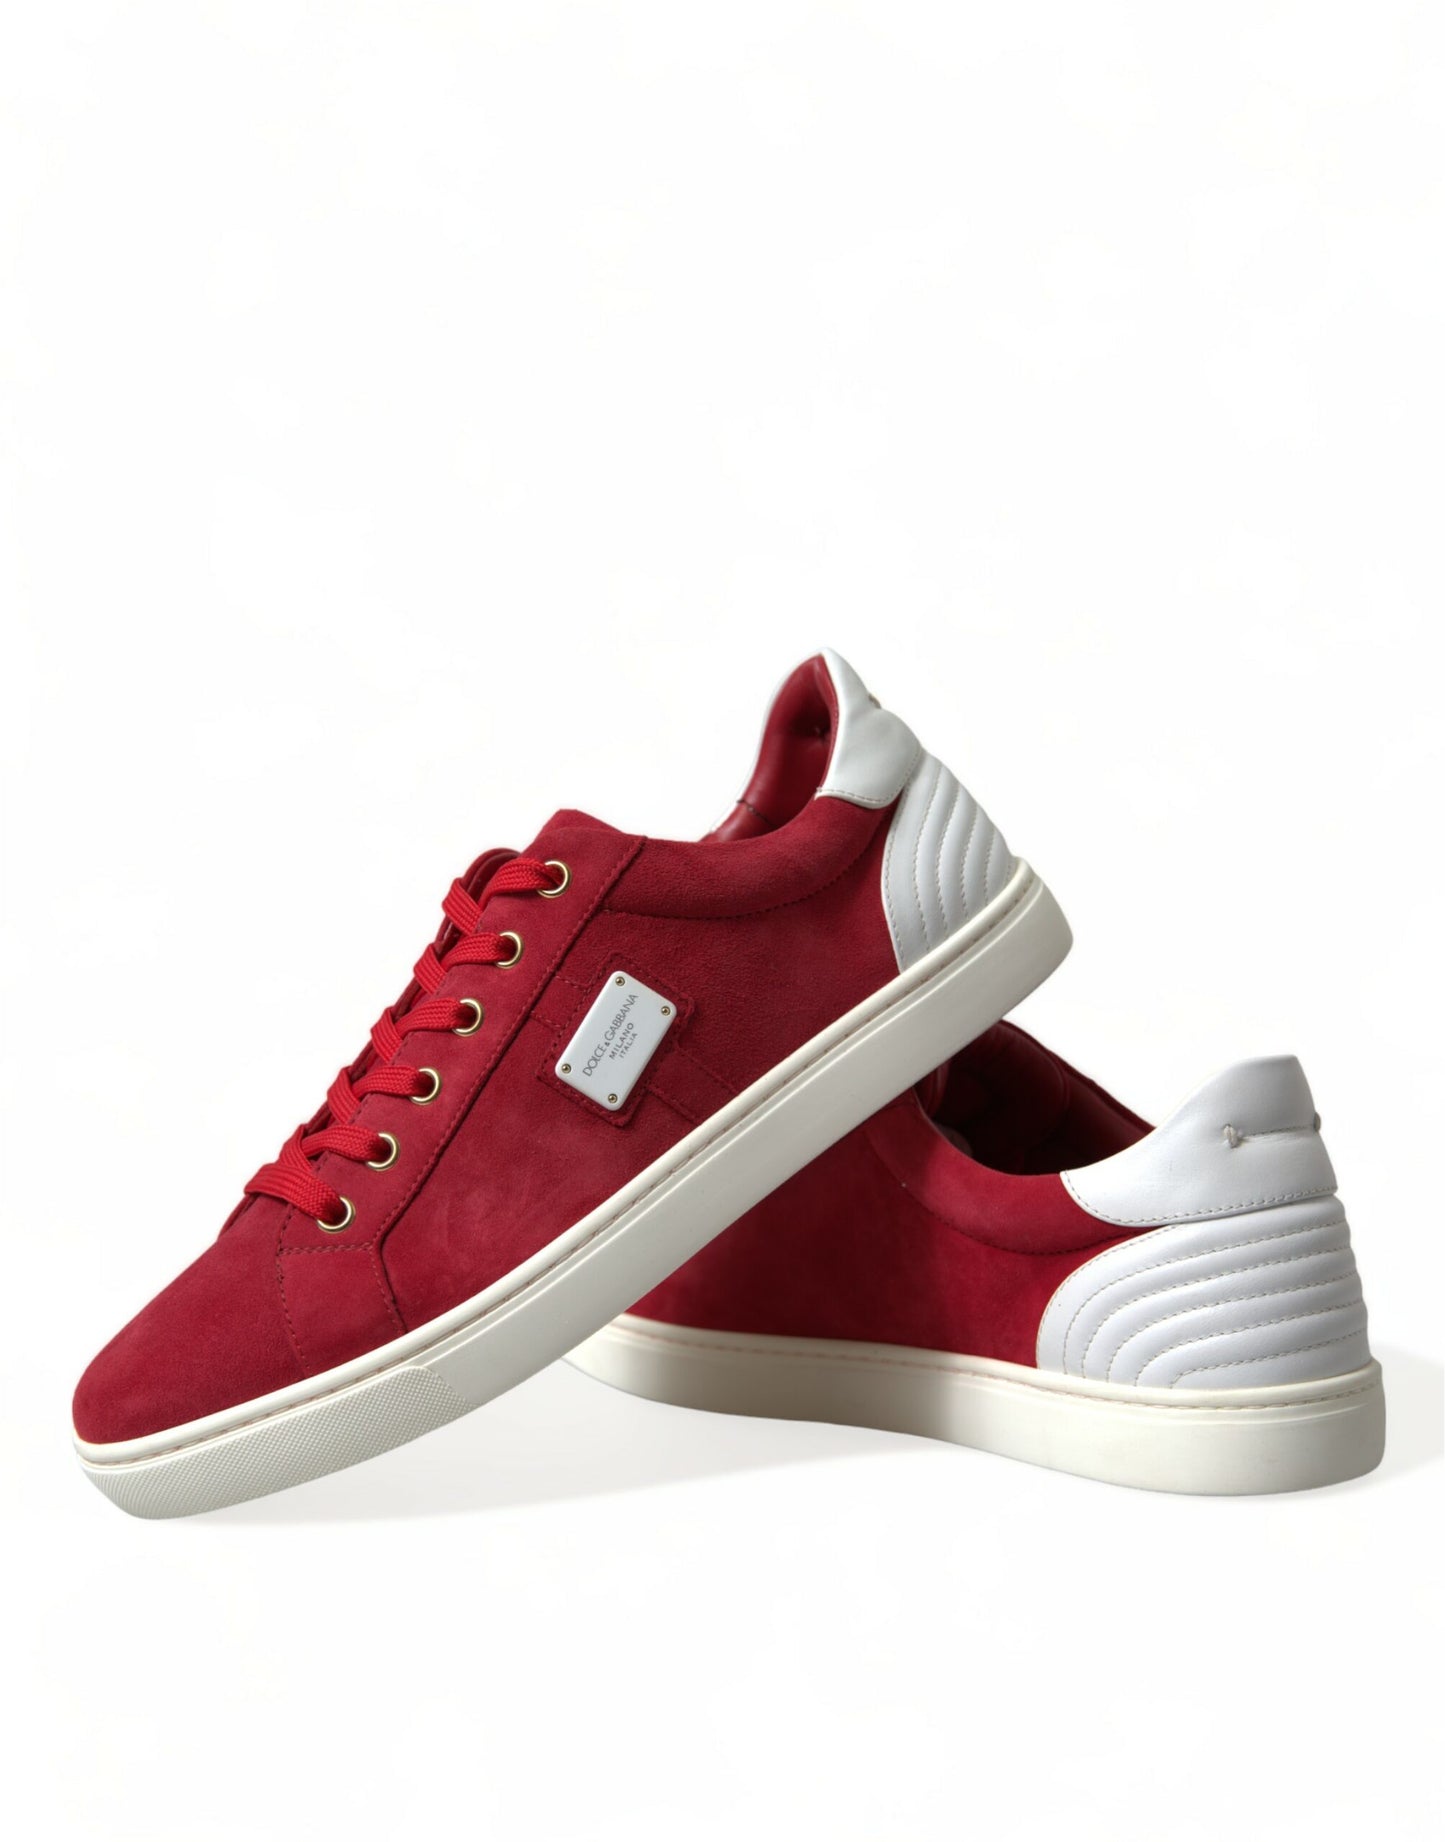 Elegant Red & White Low Top Sneakers